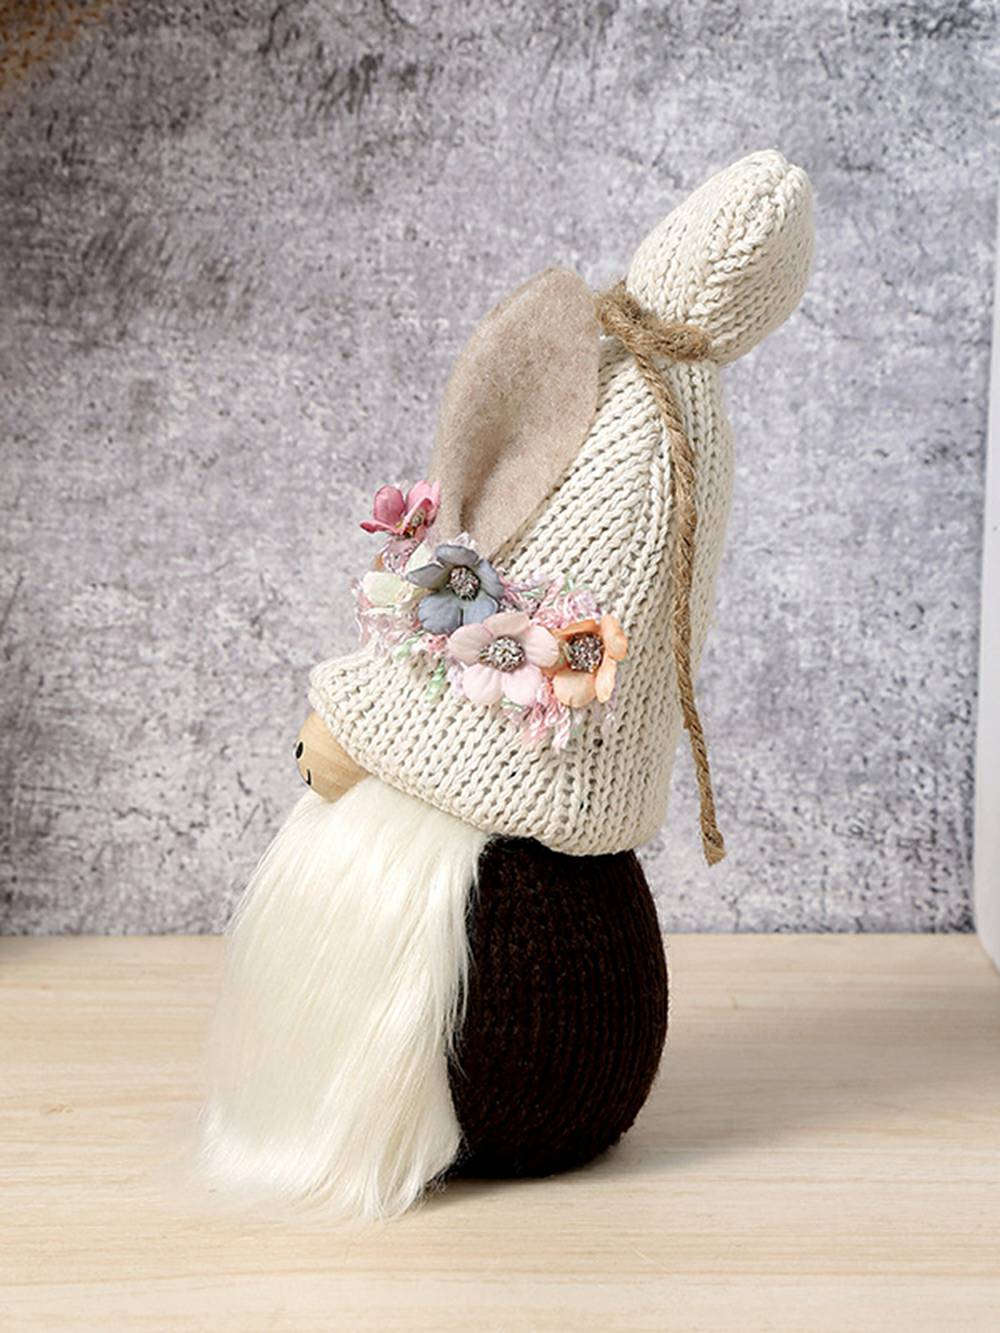 Chrëschtdag Plüsch Cute Llama Rudolph Doll